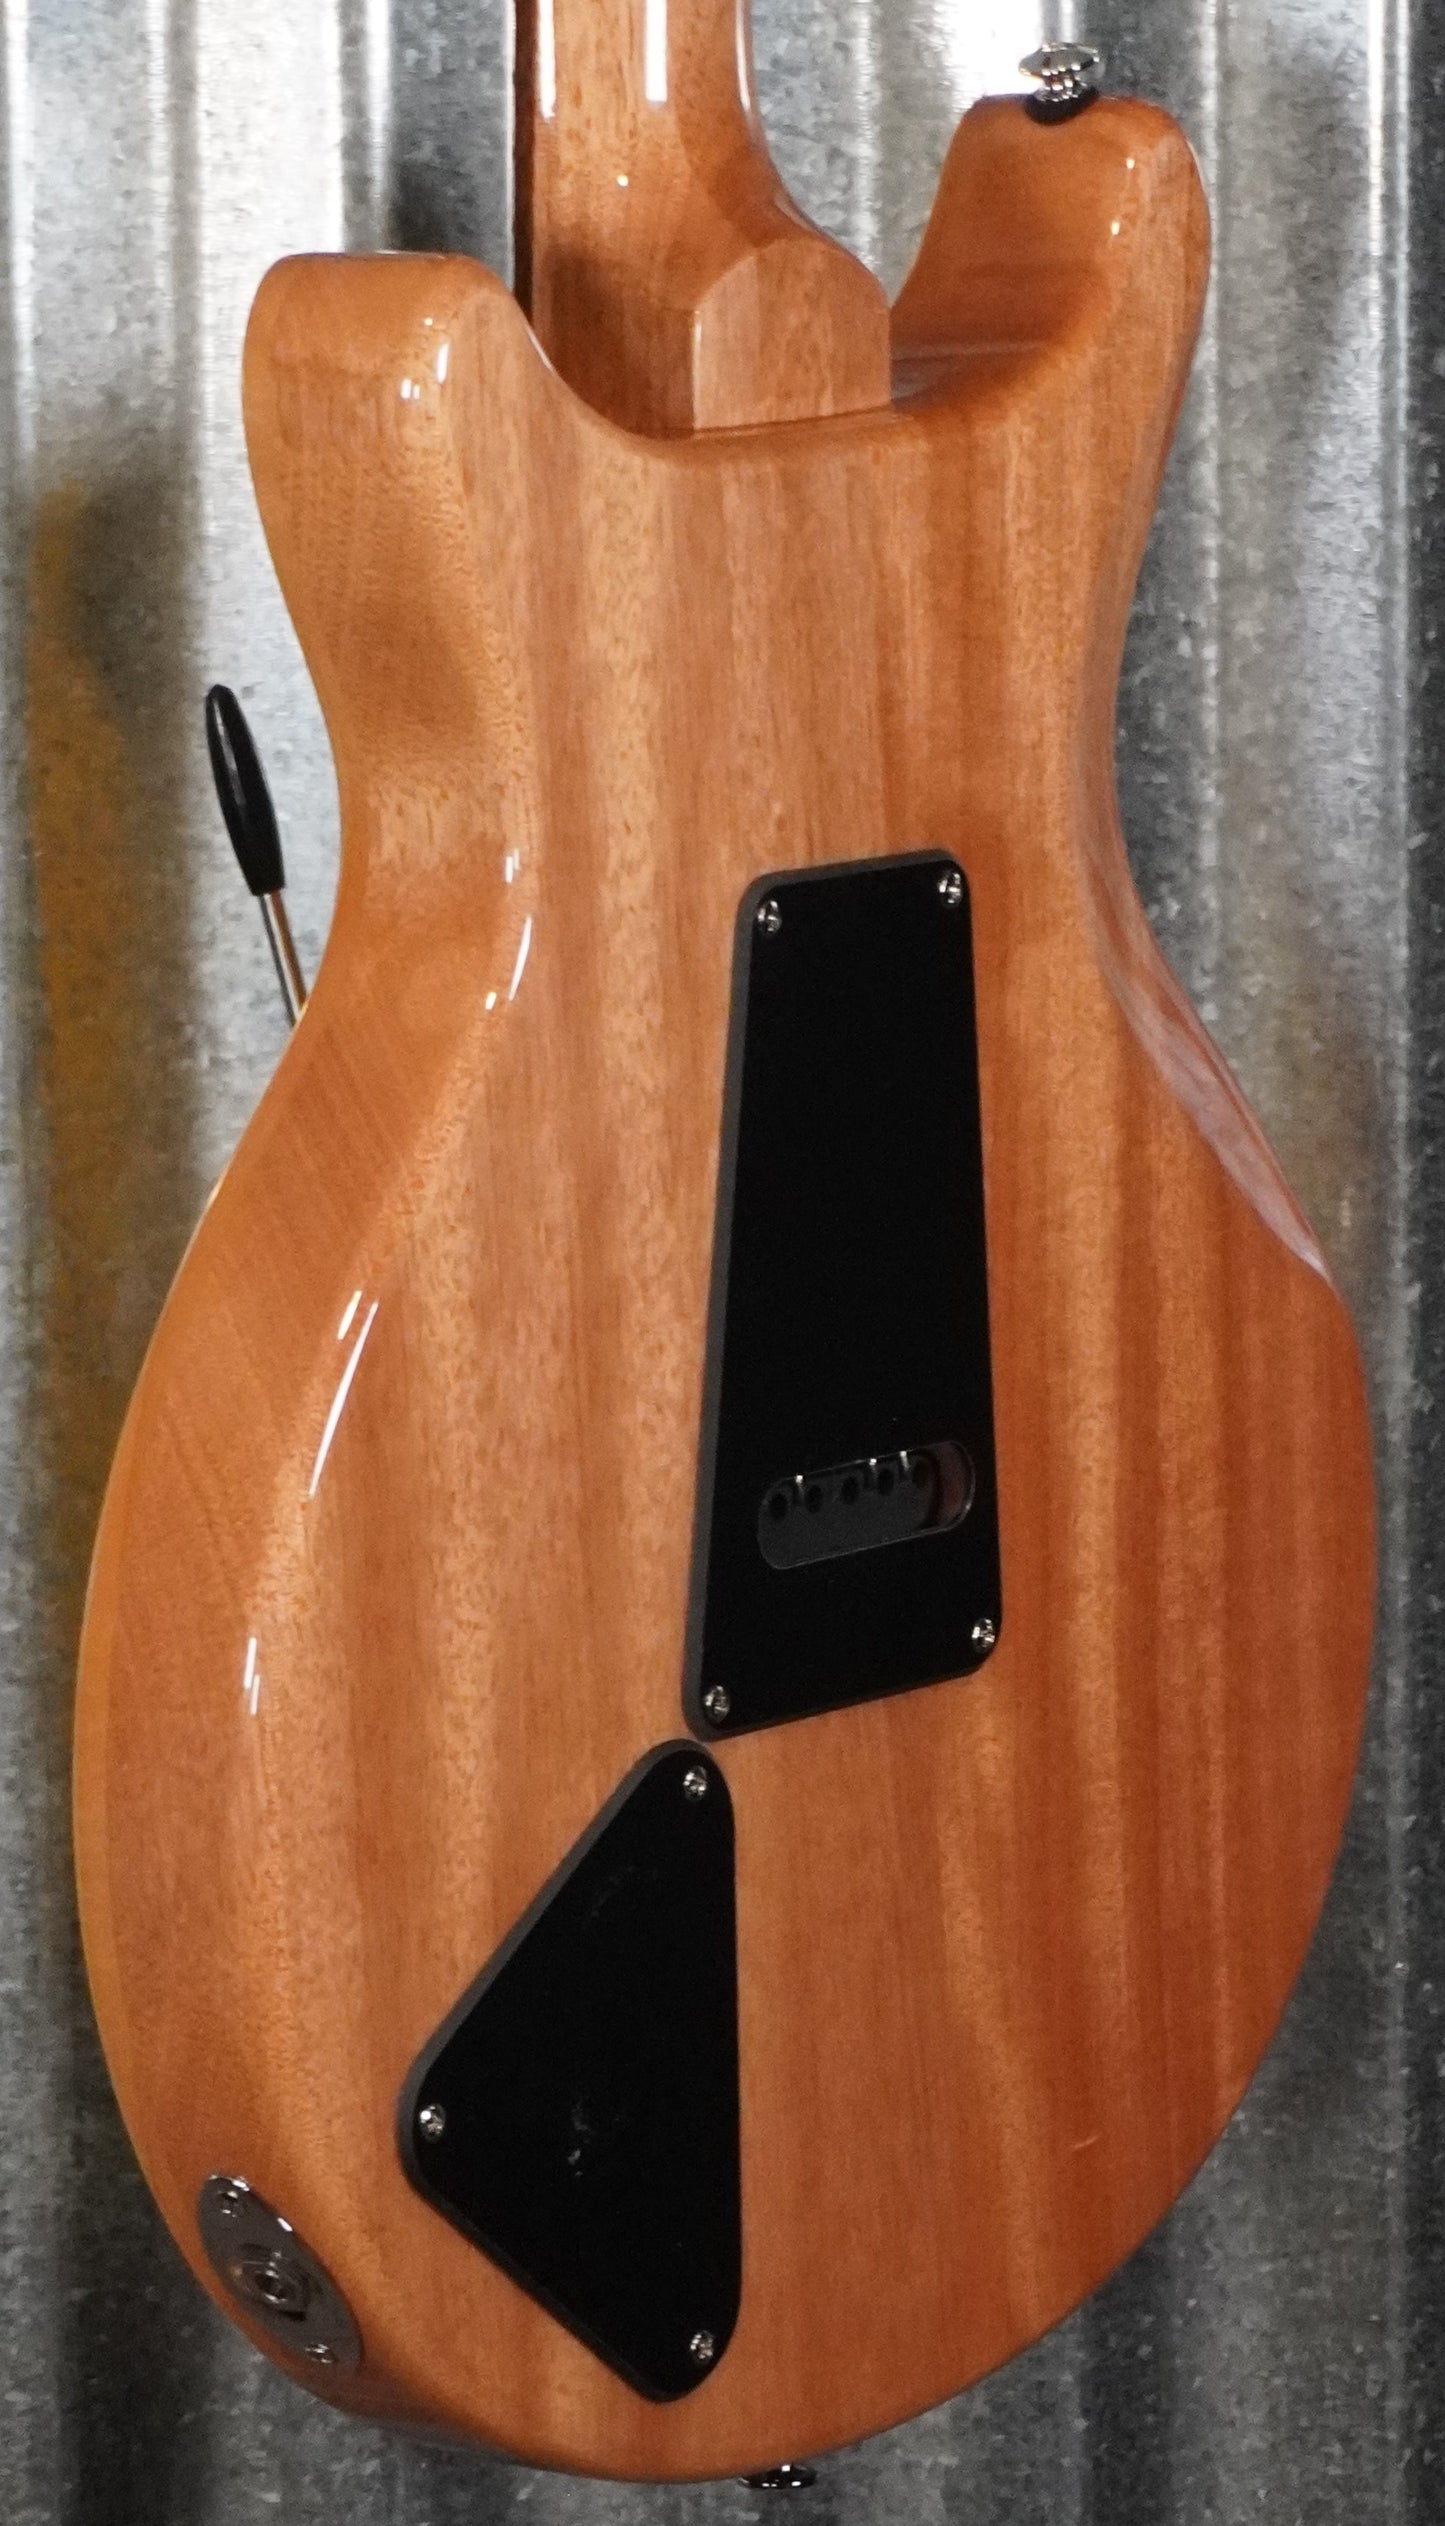 PRS Paul Reed Smith SE Santana Yellow Guitar & Bag #5685